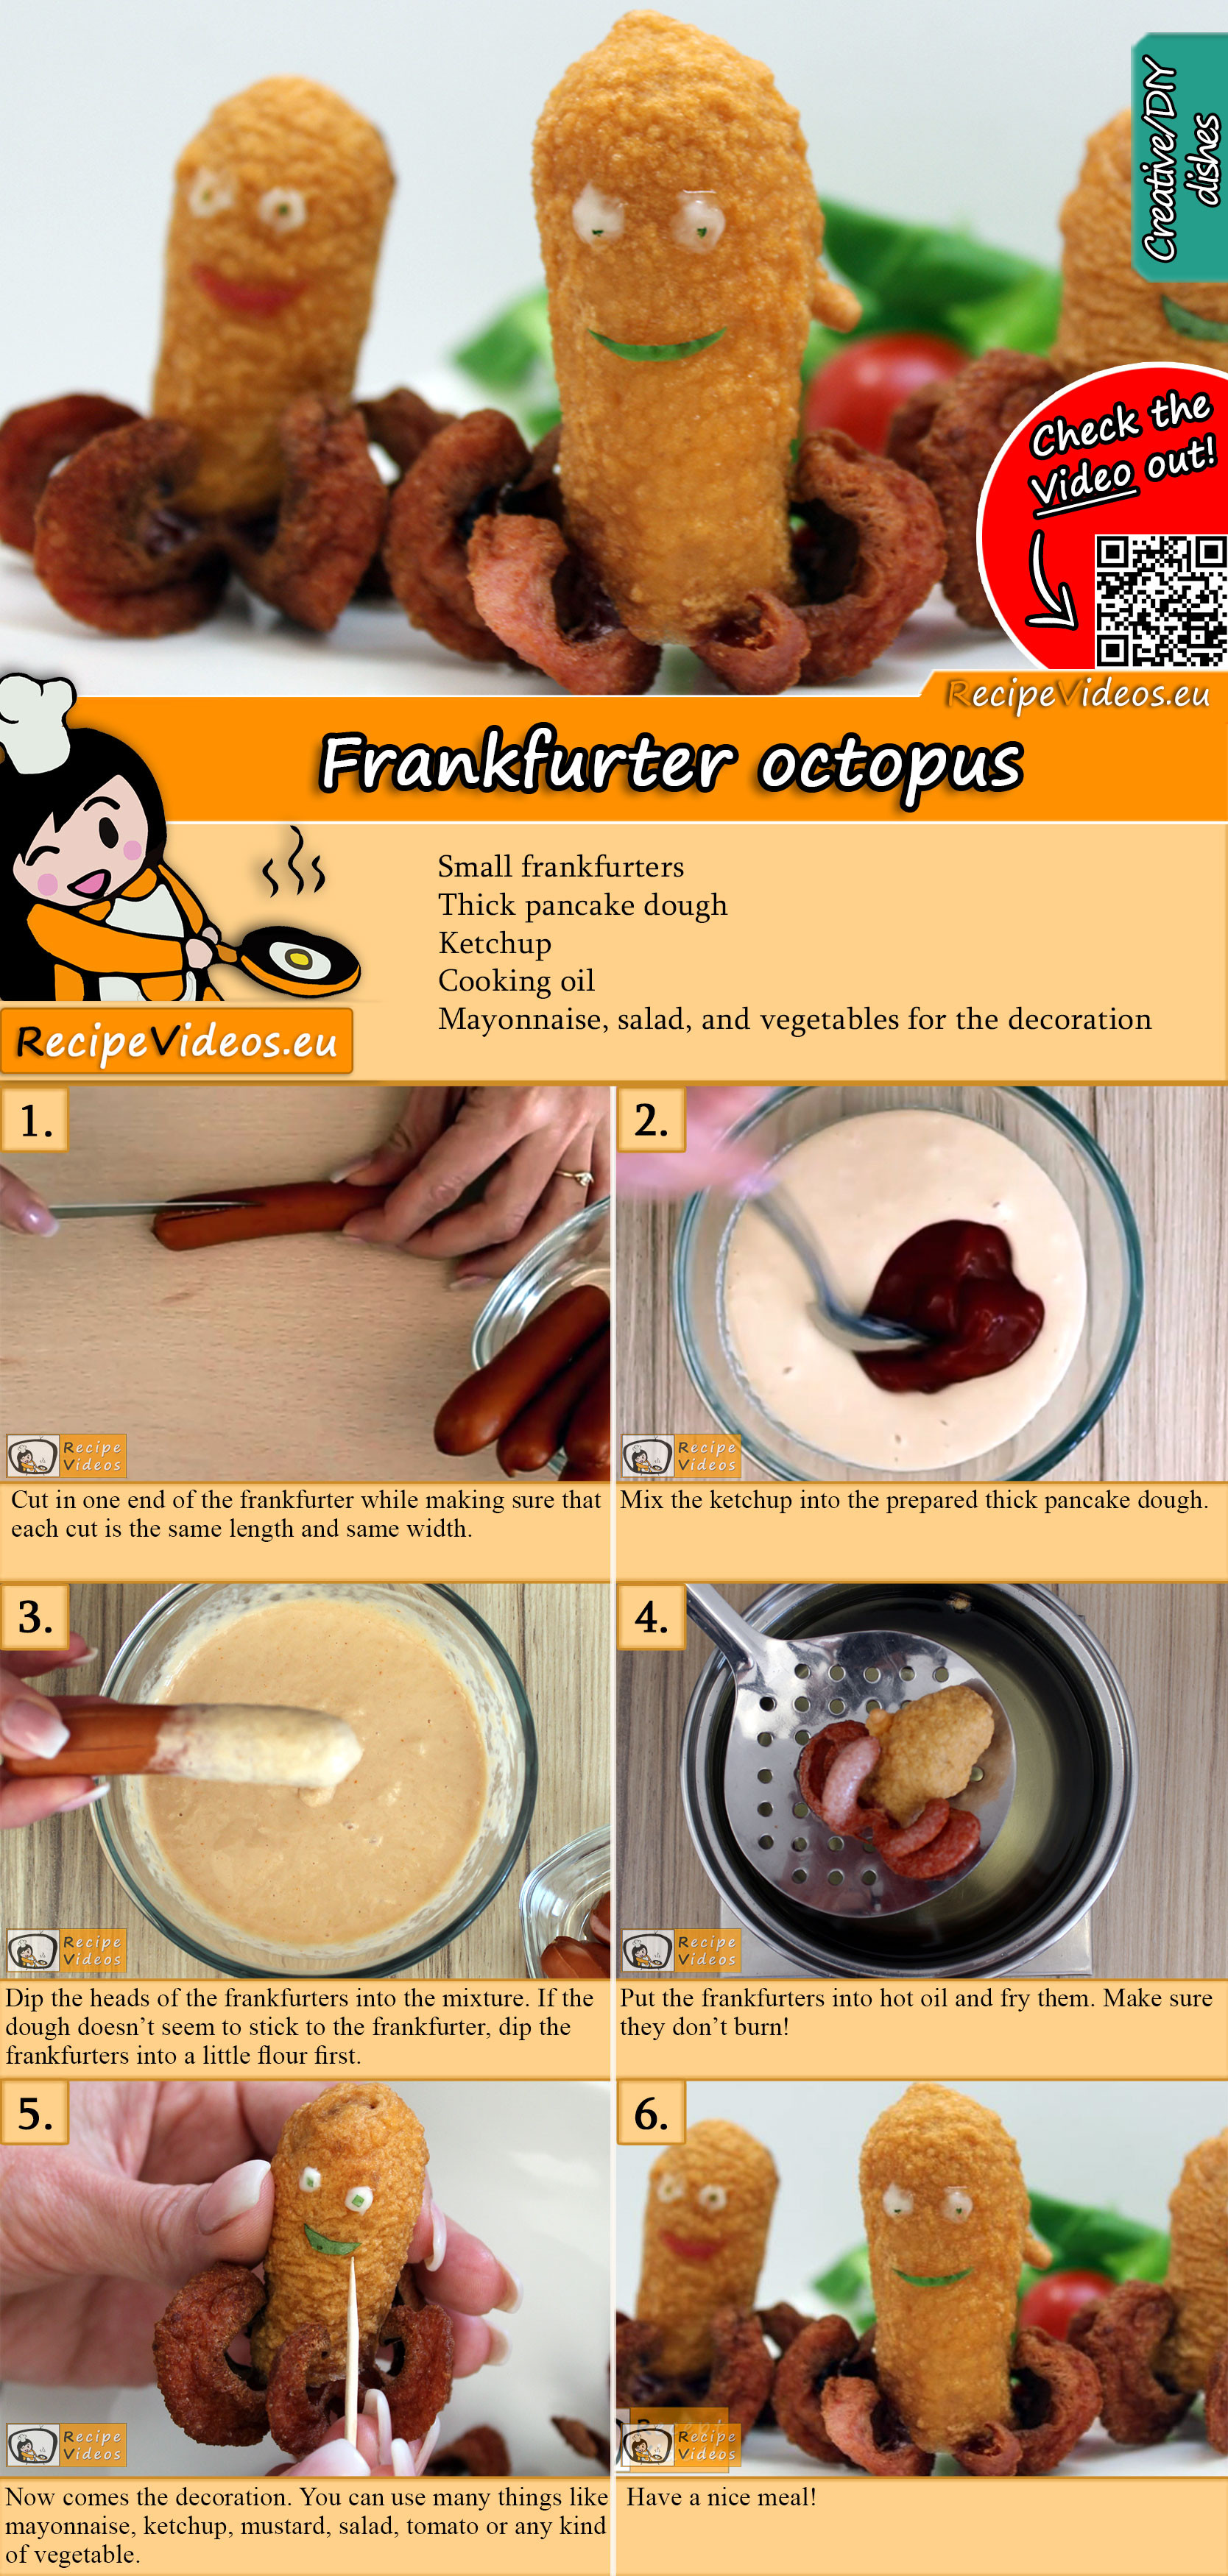 Frankfurter octopus recipe with video